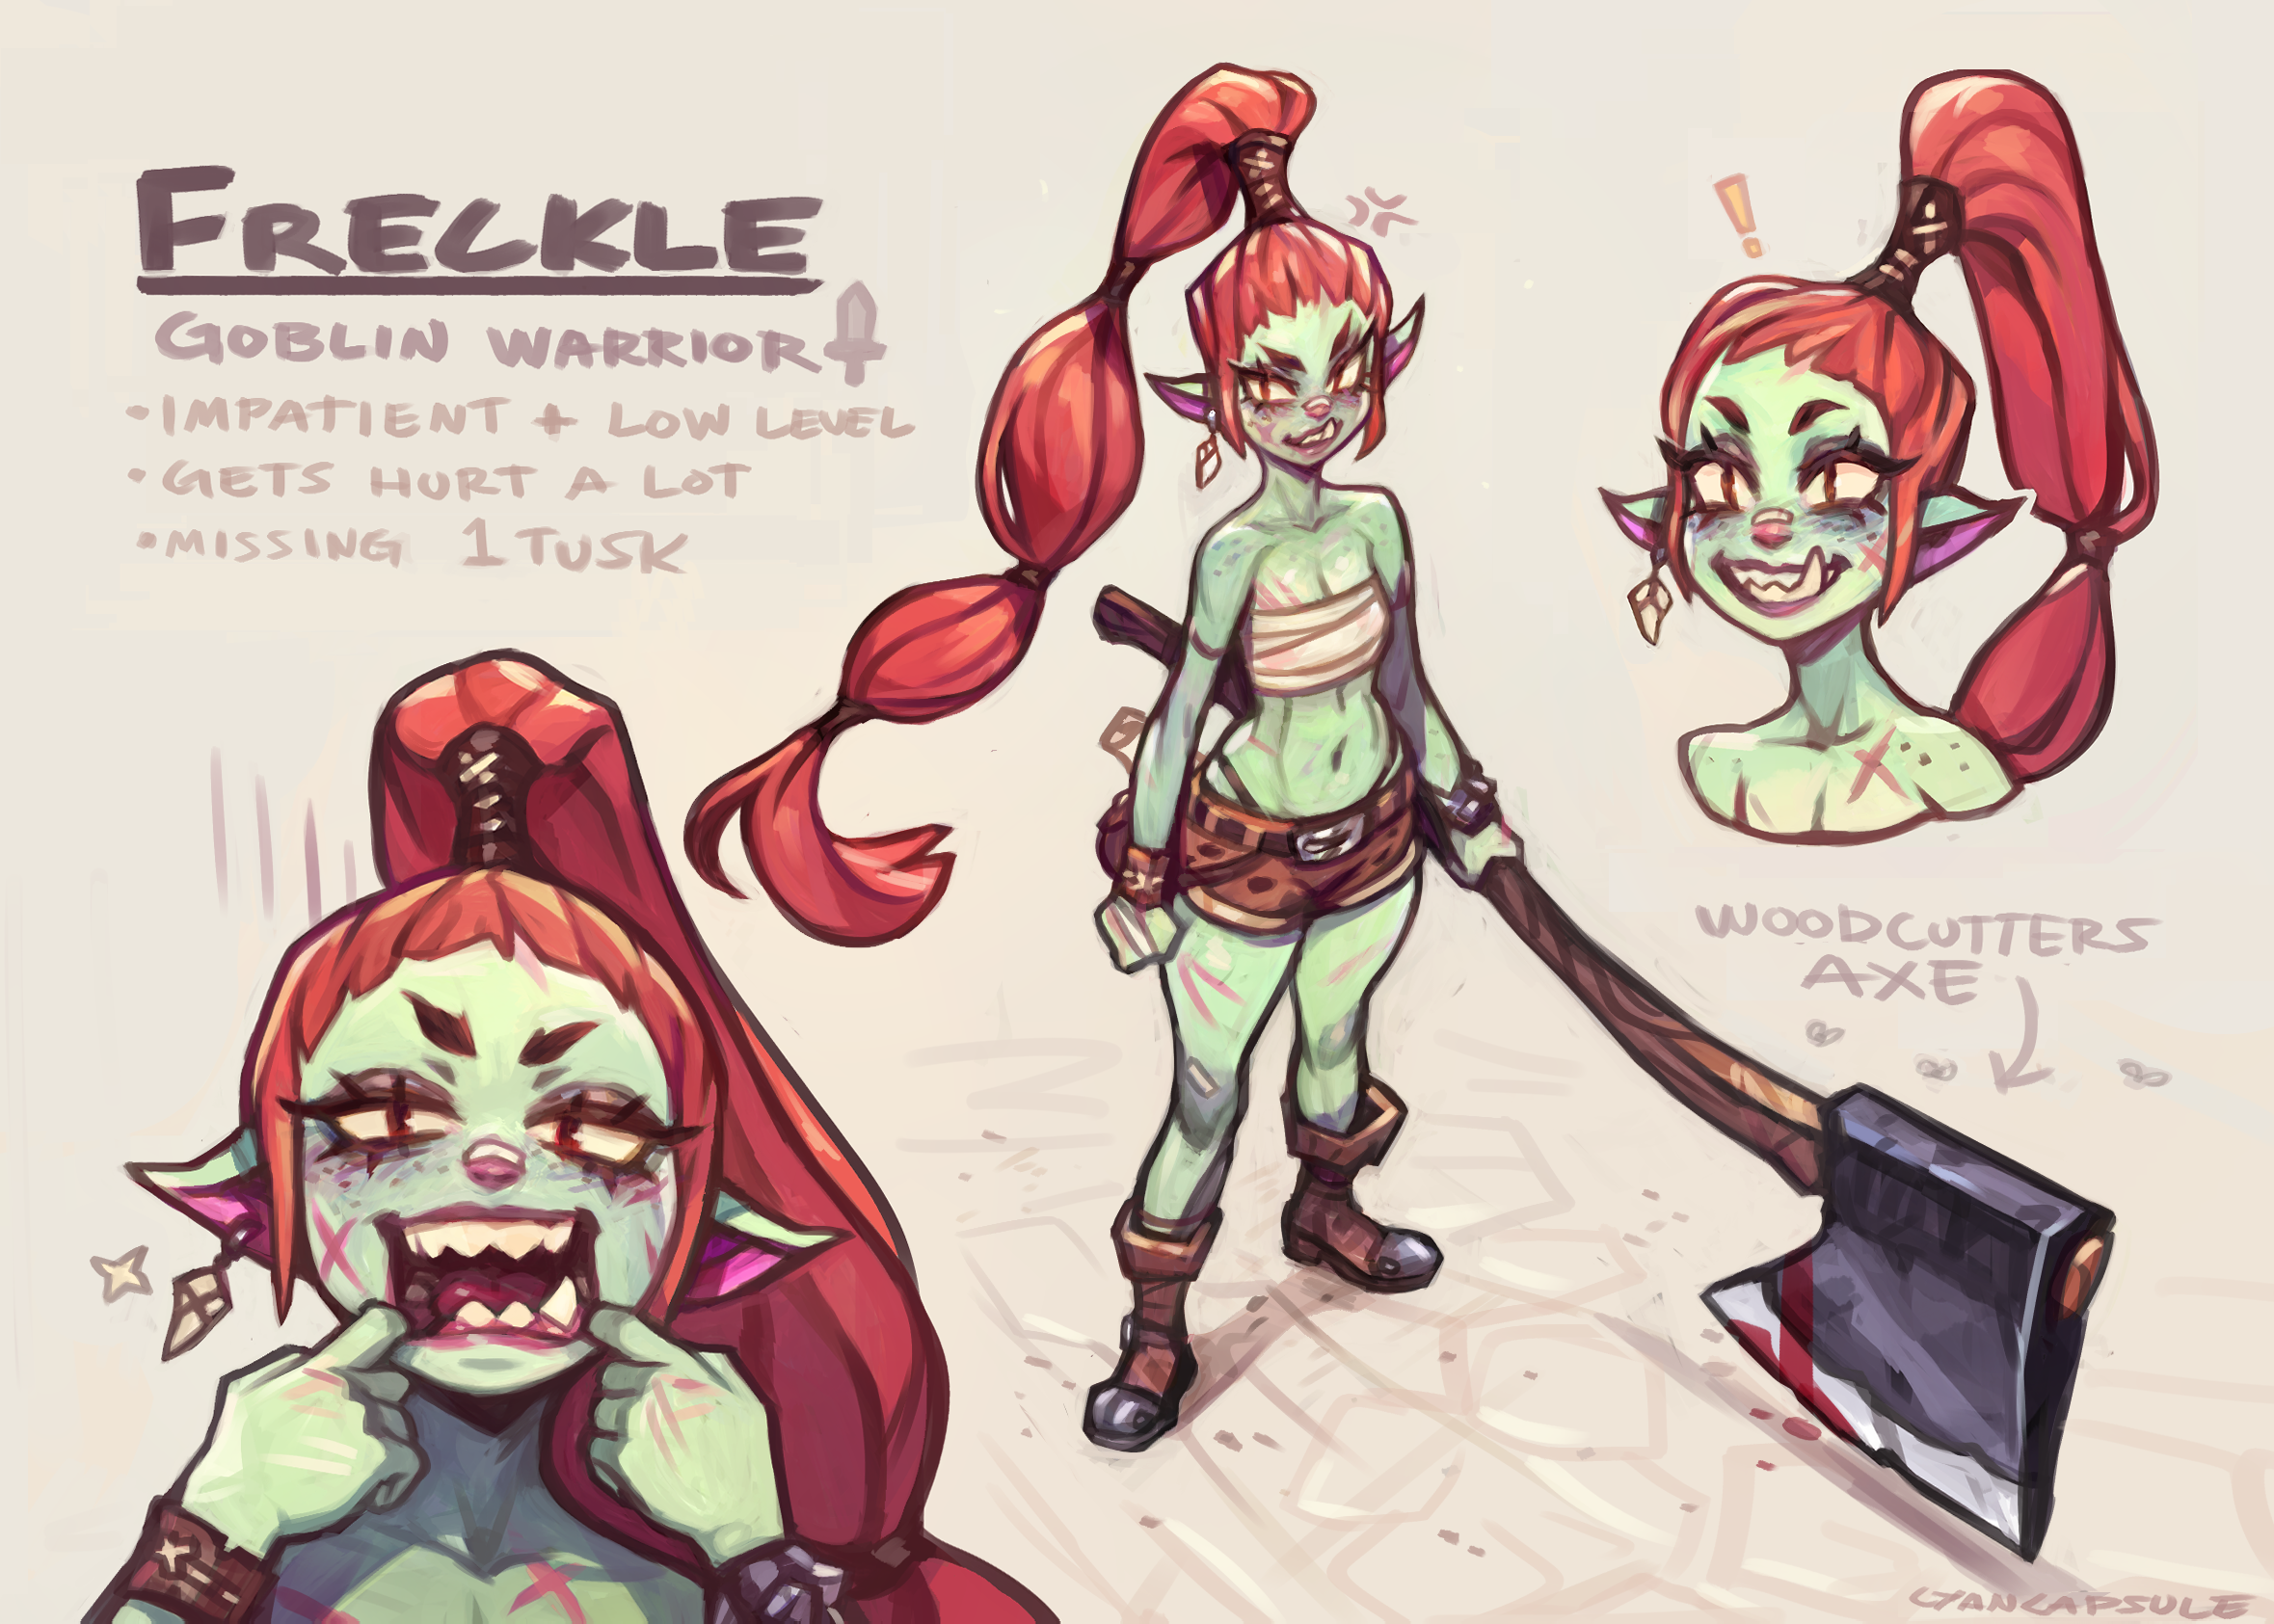 Goblin Warrior Freckle